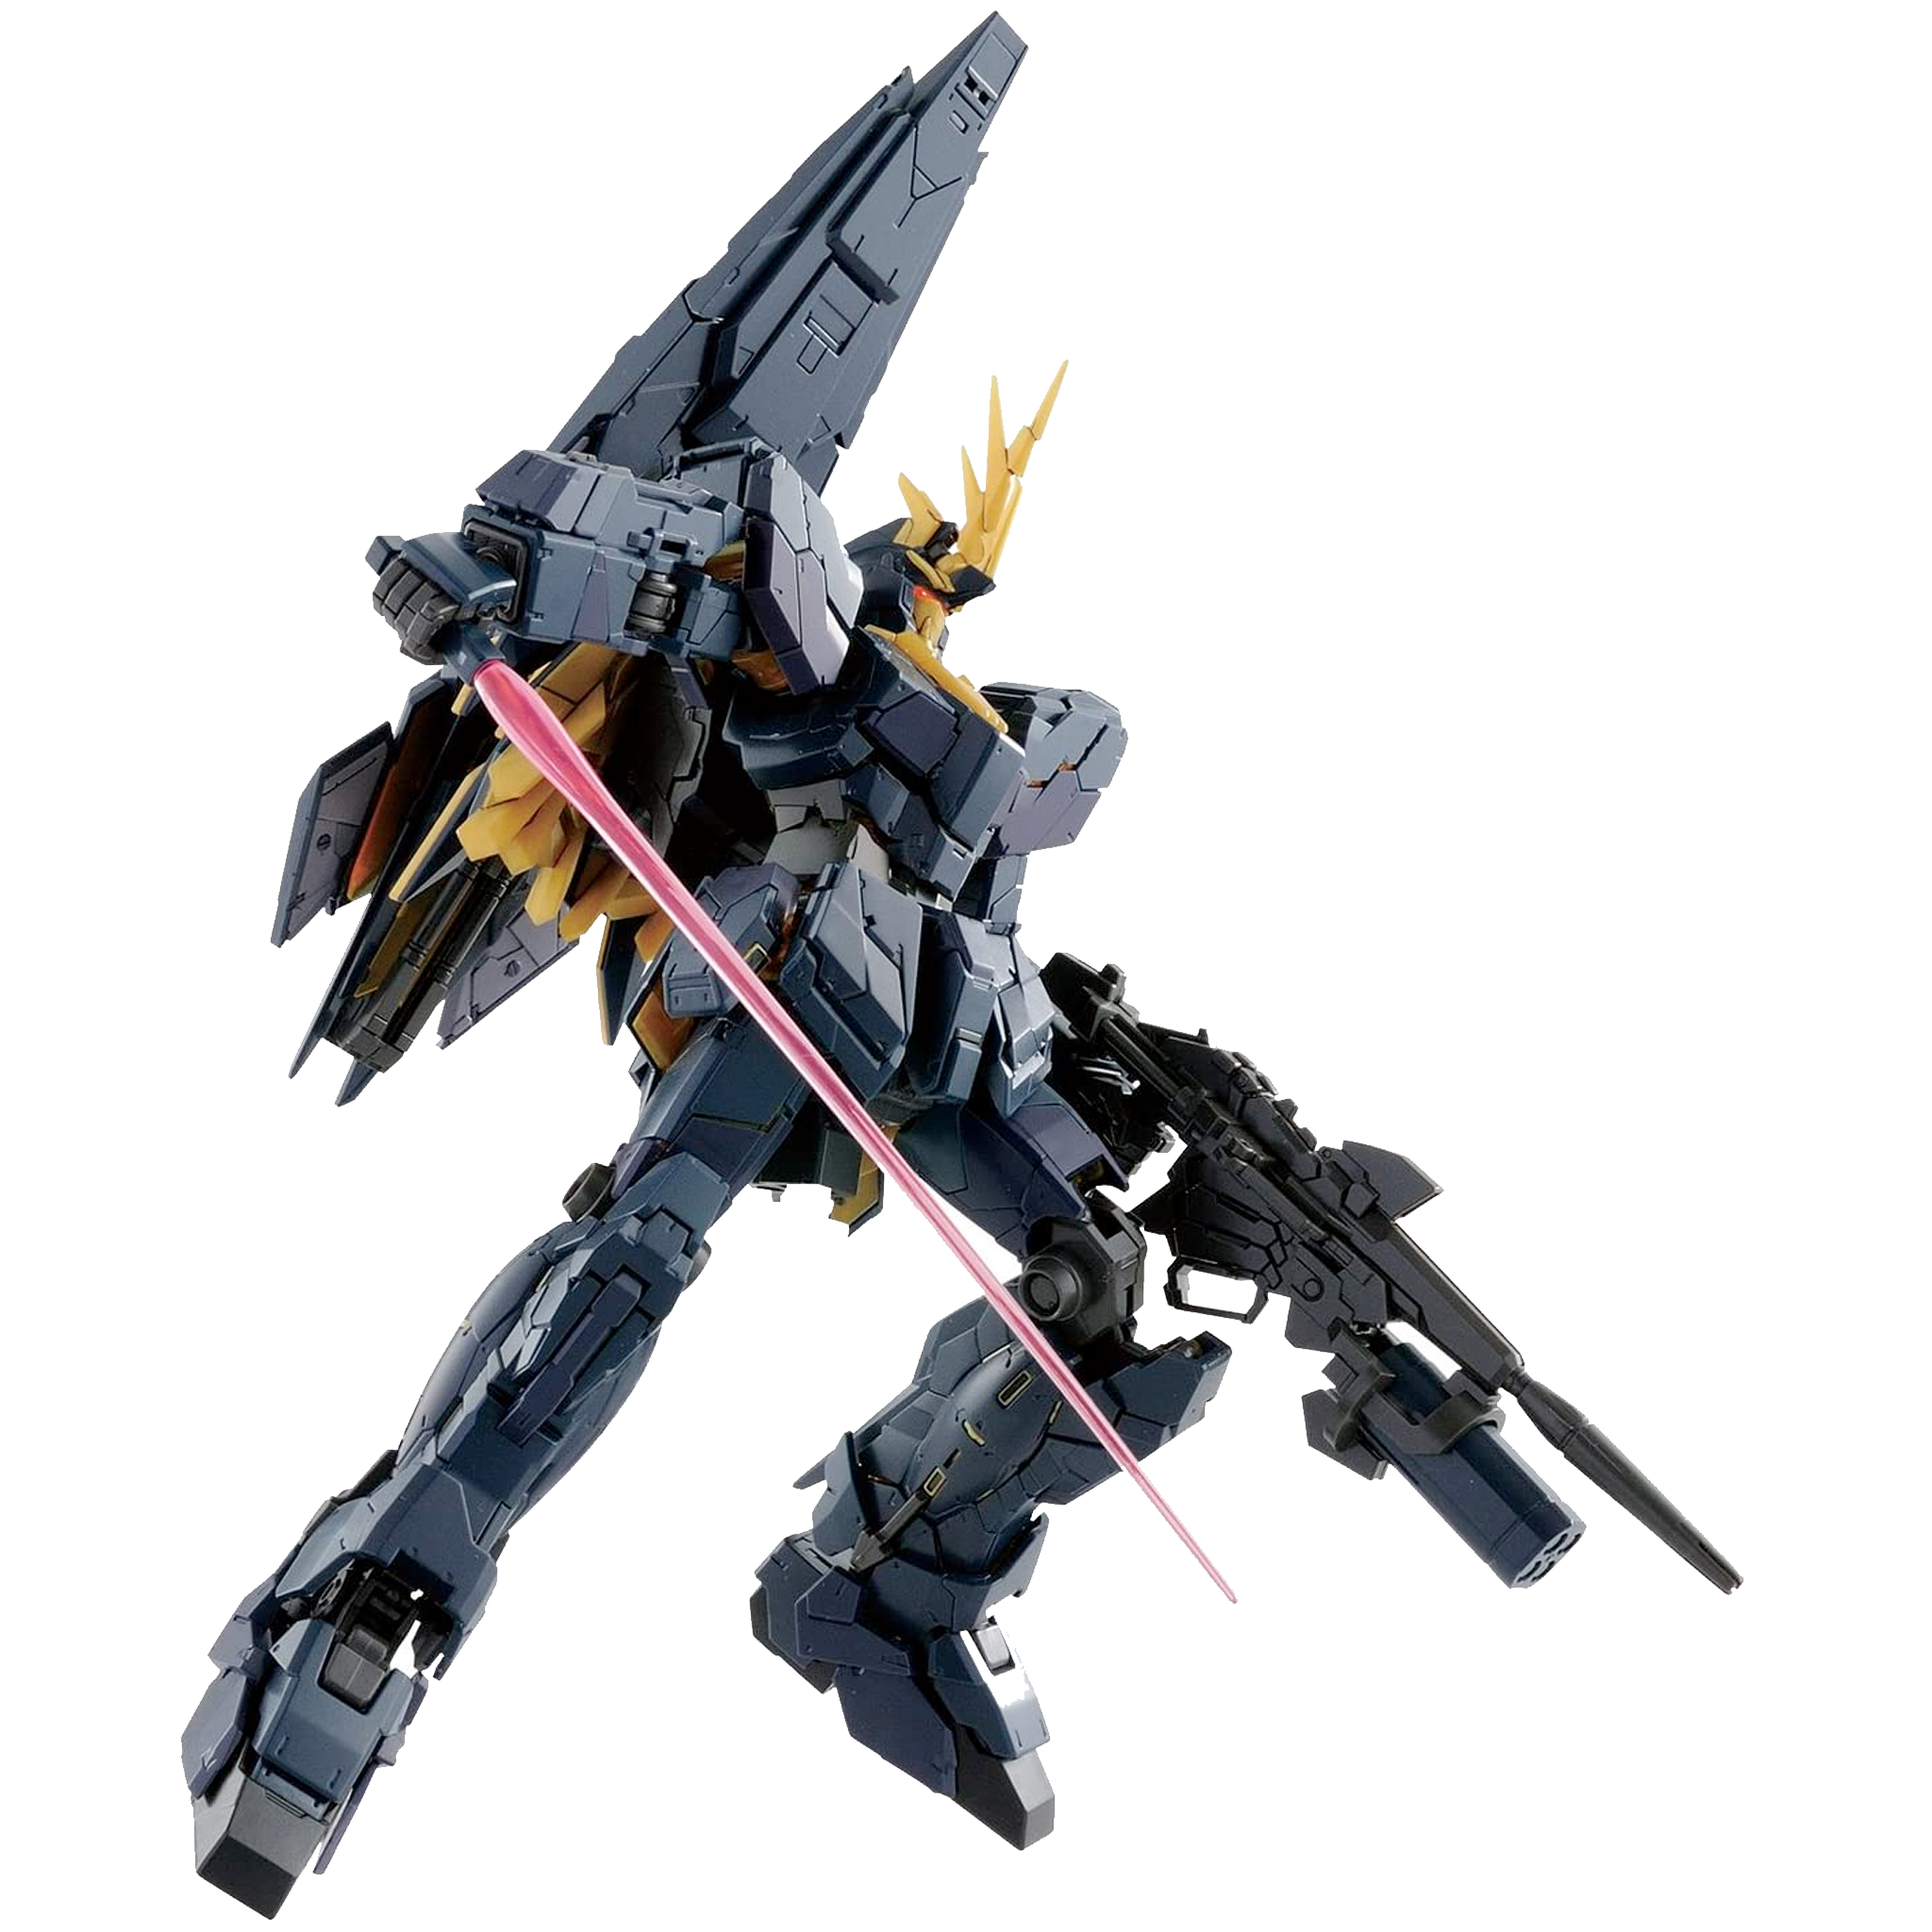 RG RX-0 Unicorn Gundam 02 Banshee Norn 1/144